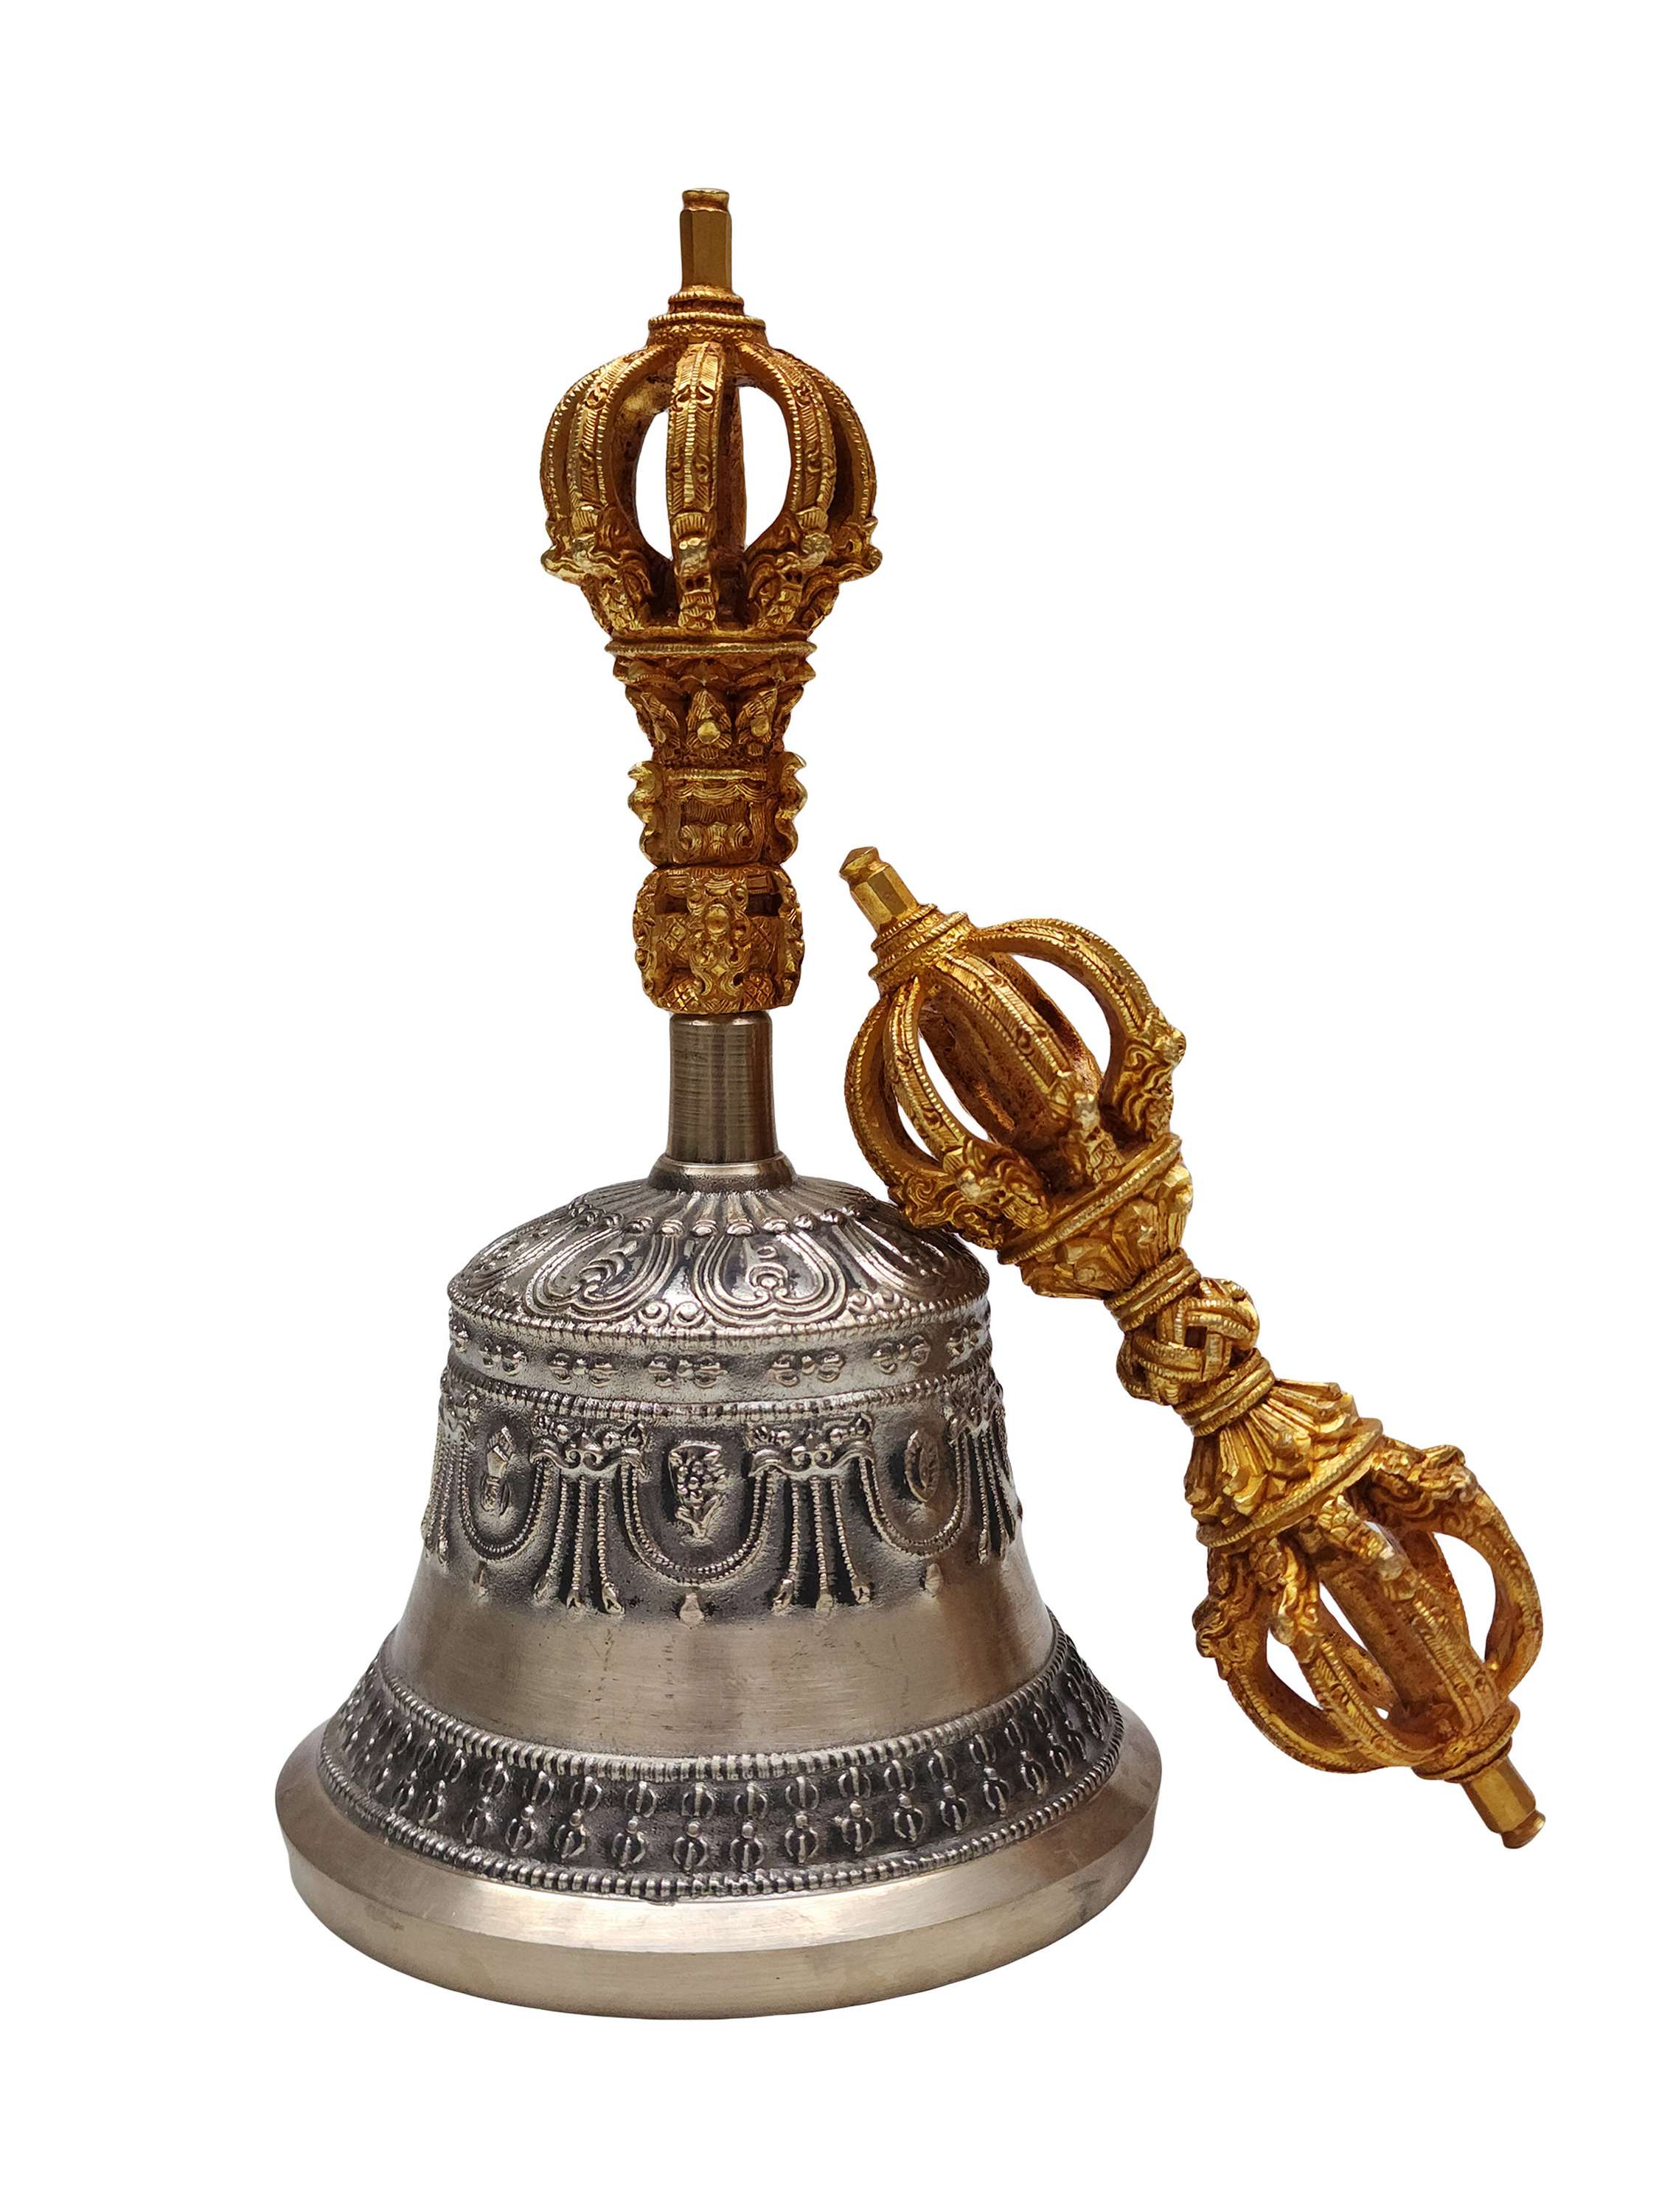 dehradun Bell And Dorje vajra, high Quality, Antique Finishing, Gold Plated On Dorje, Bronze Bell With Pure Copper Gold Plated Dorje And Bell Handle